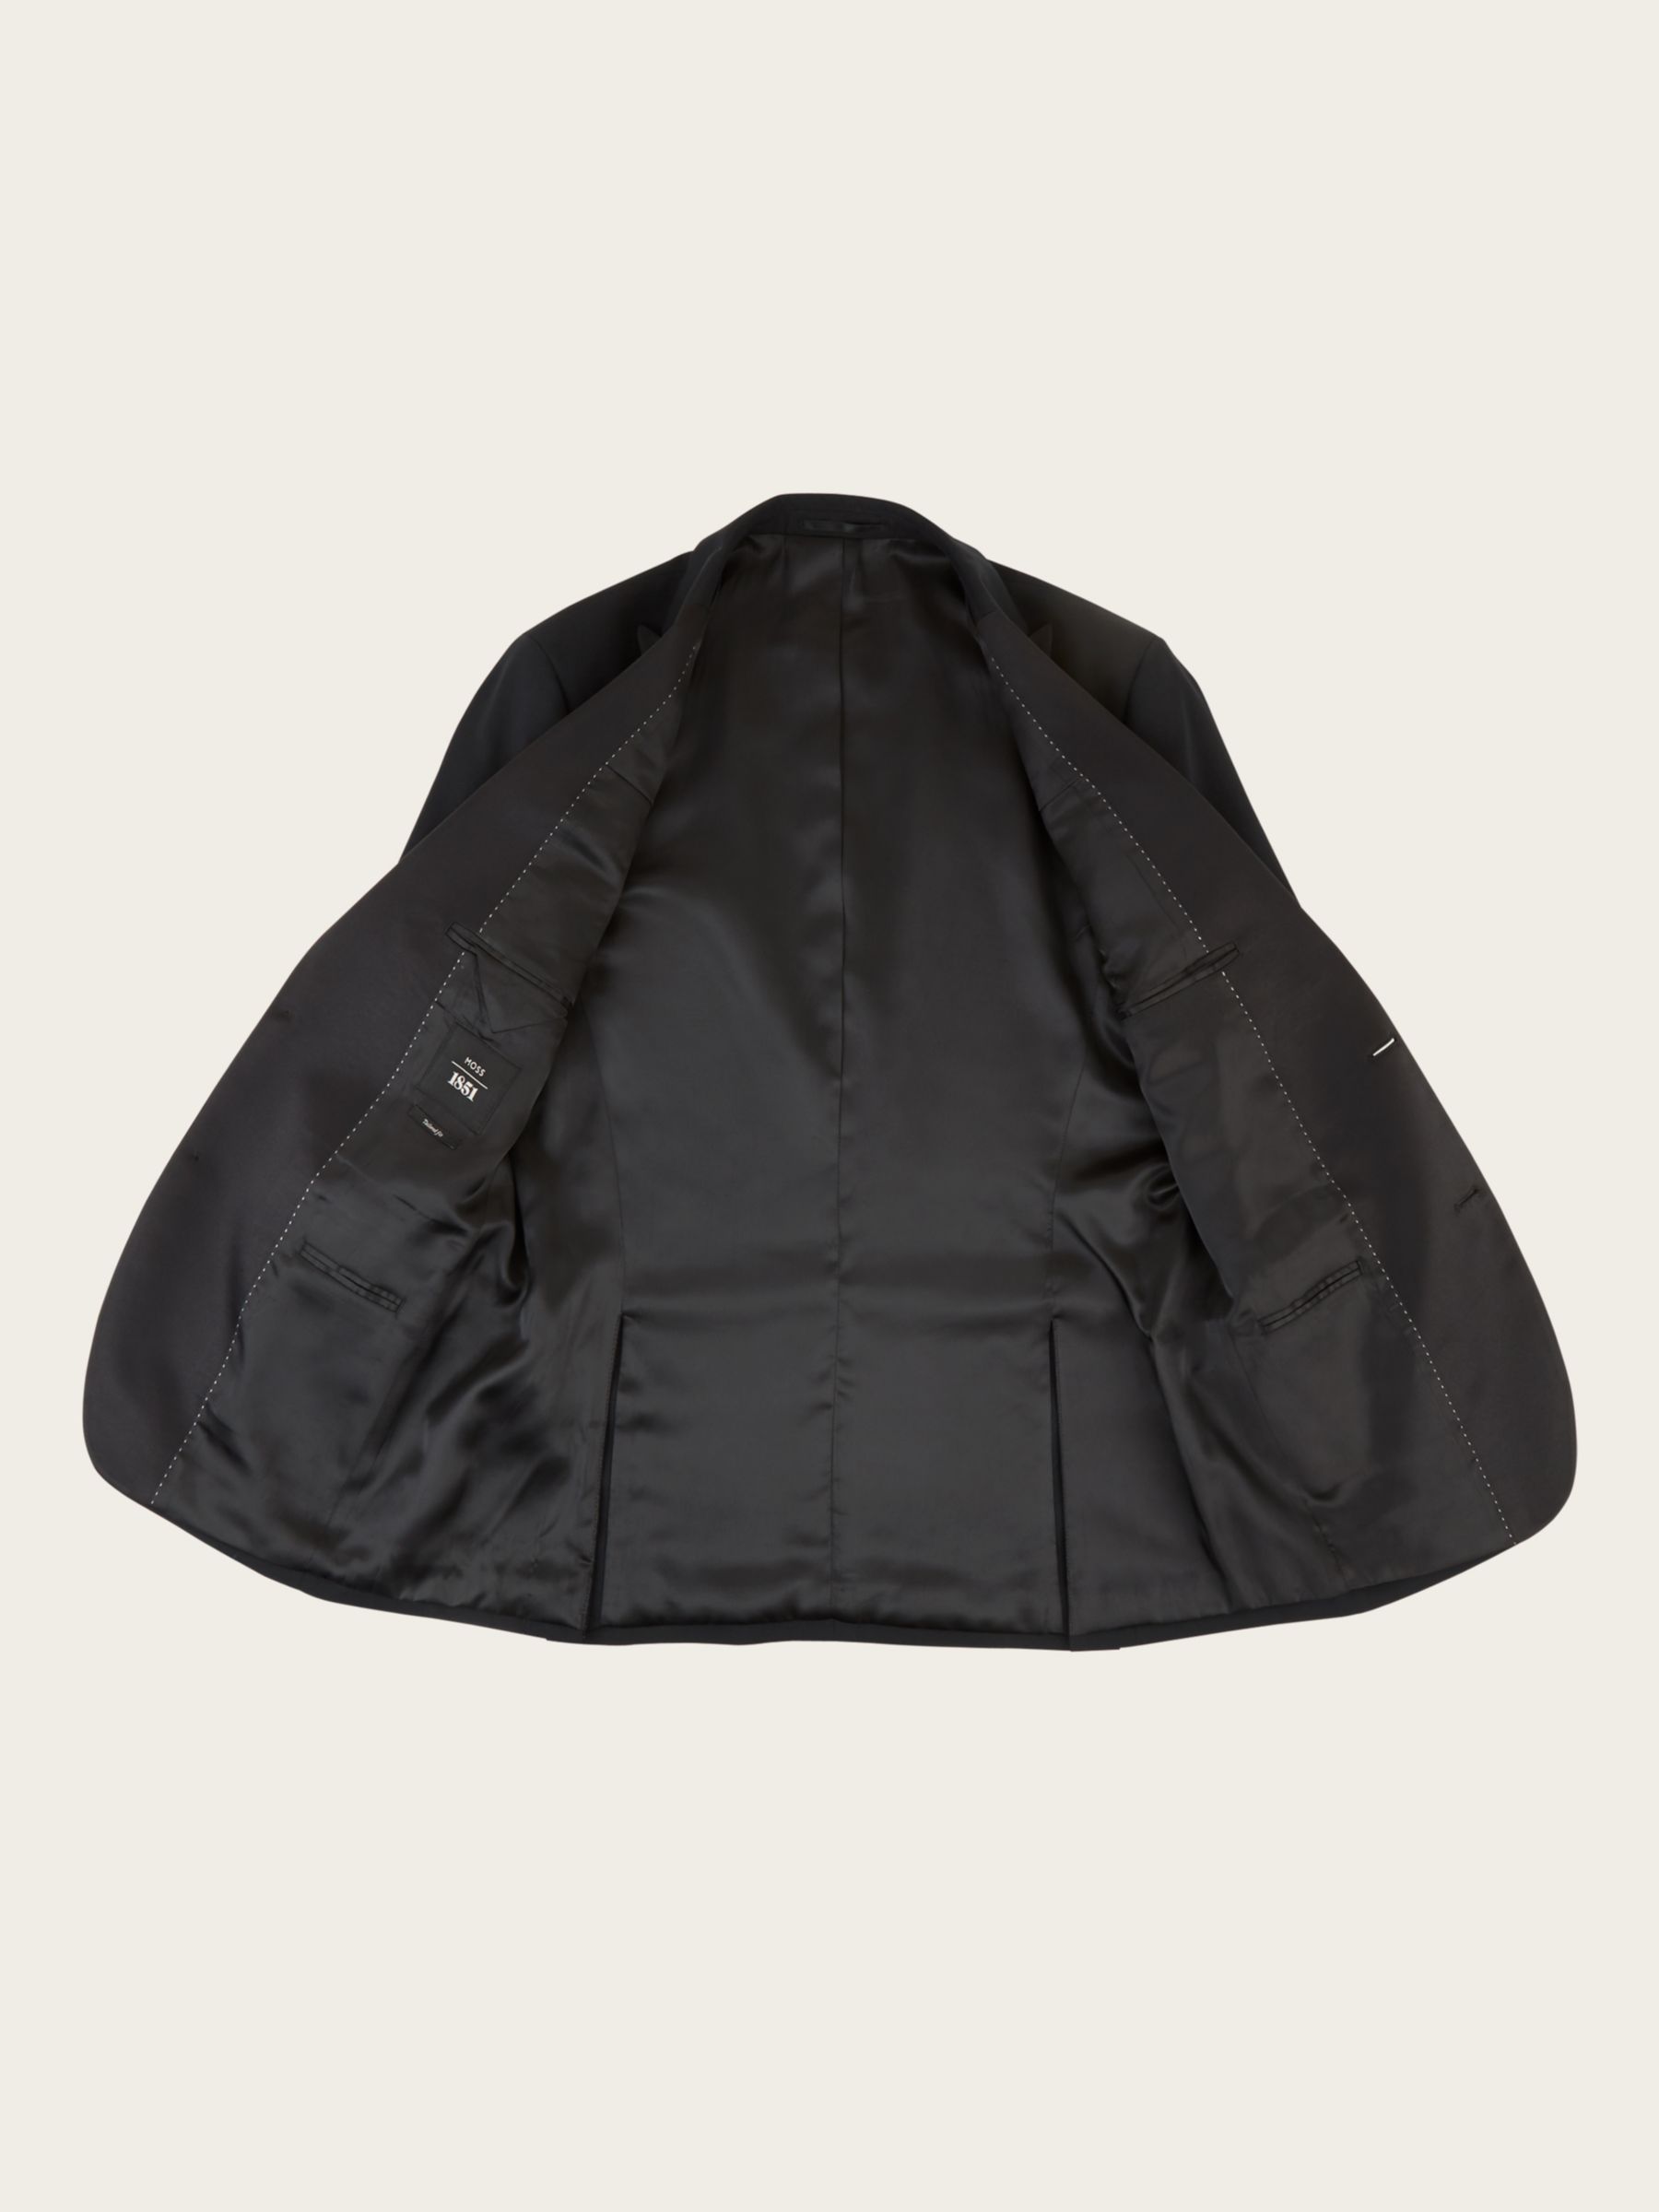 Buy Moss Tailored Fit Satin Trim Lapel Tuxedo Jacket, Black Online at johnlewis.com